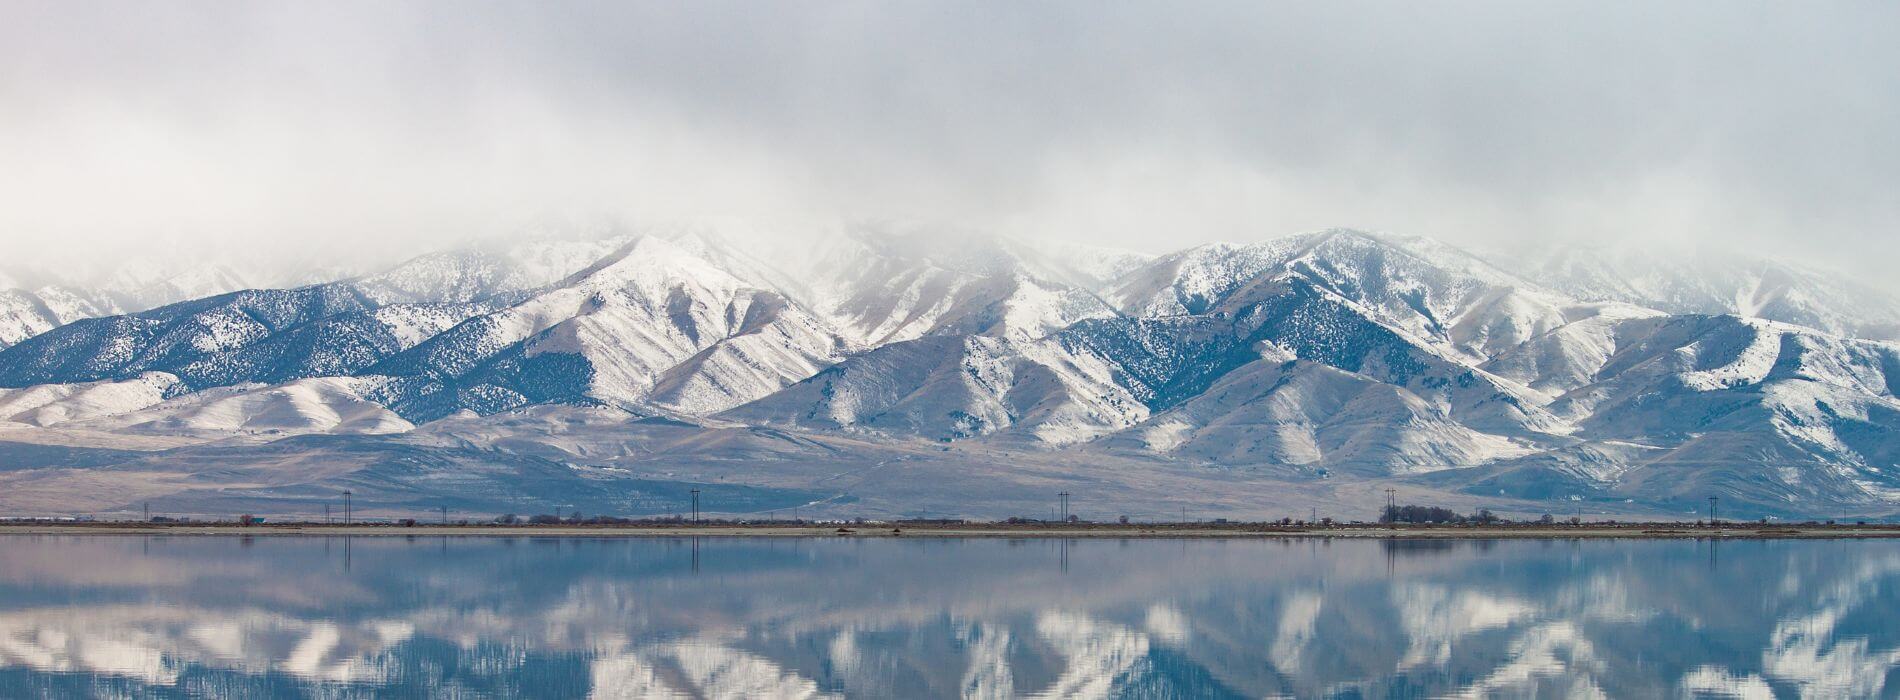 Great Salt Lake in Winter